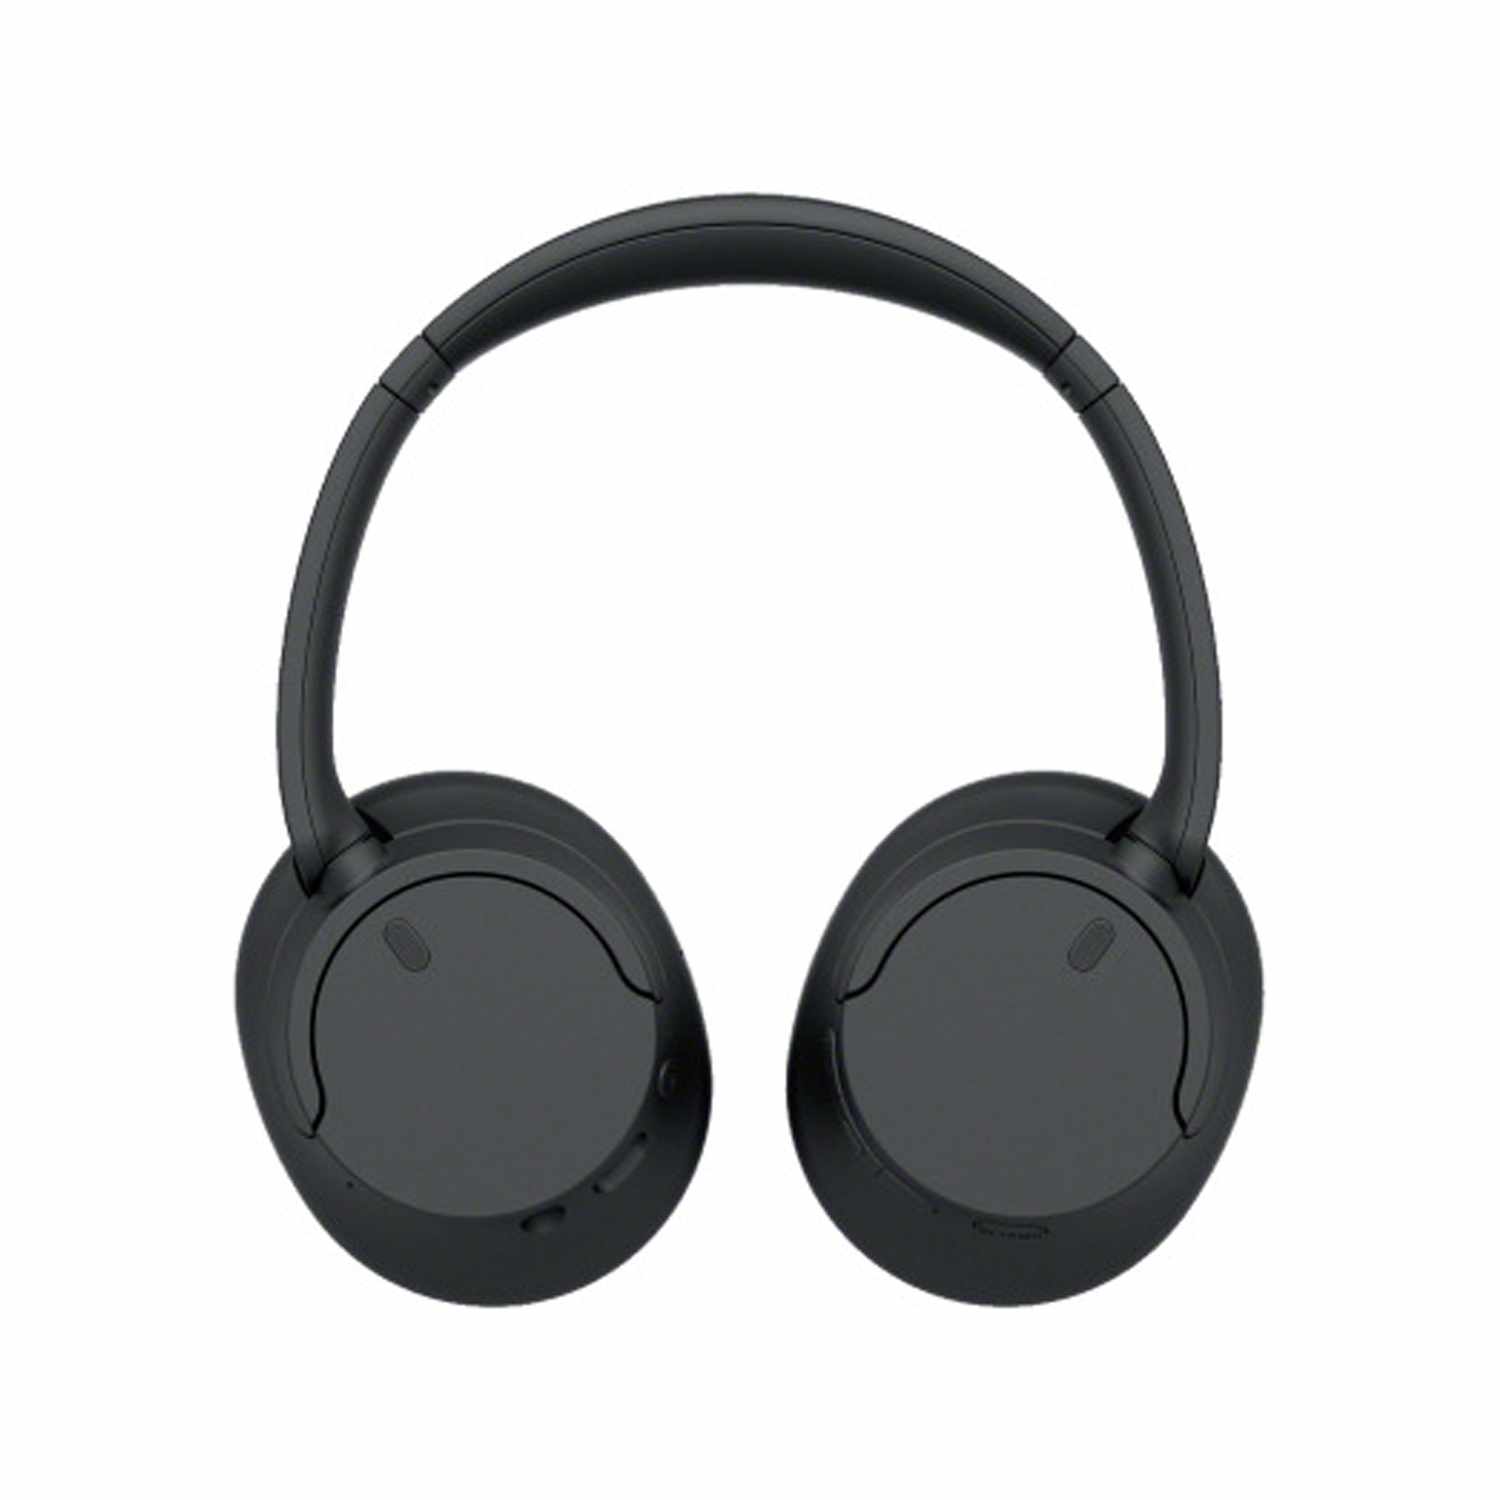 Sony Wireless Noise Cancelling Headphone